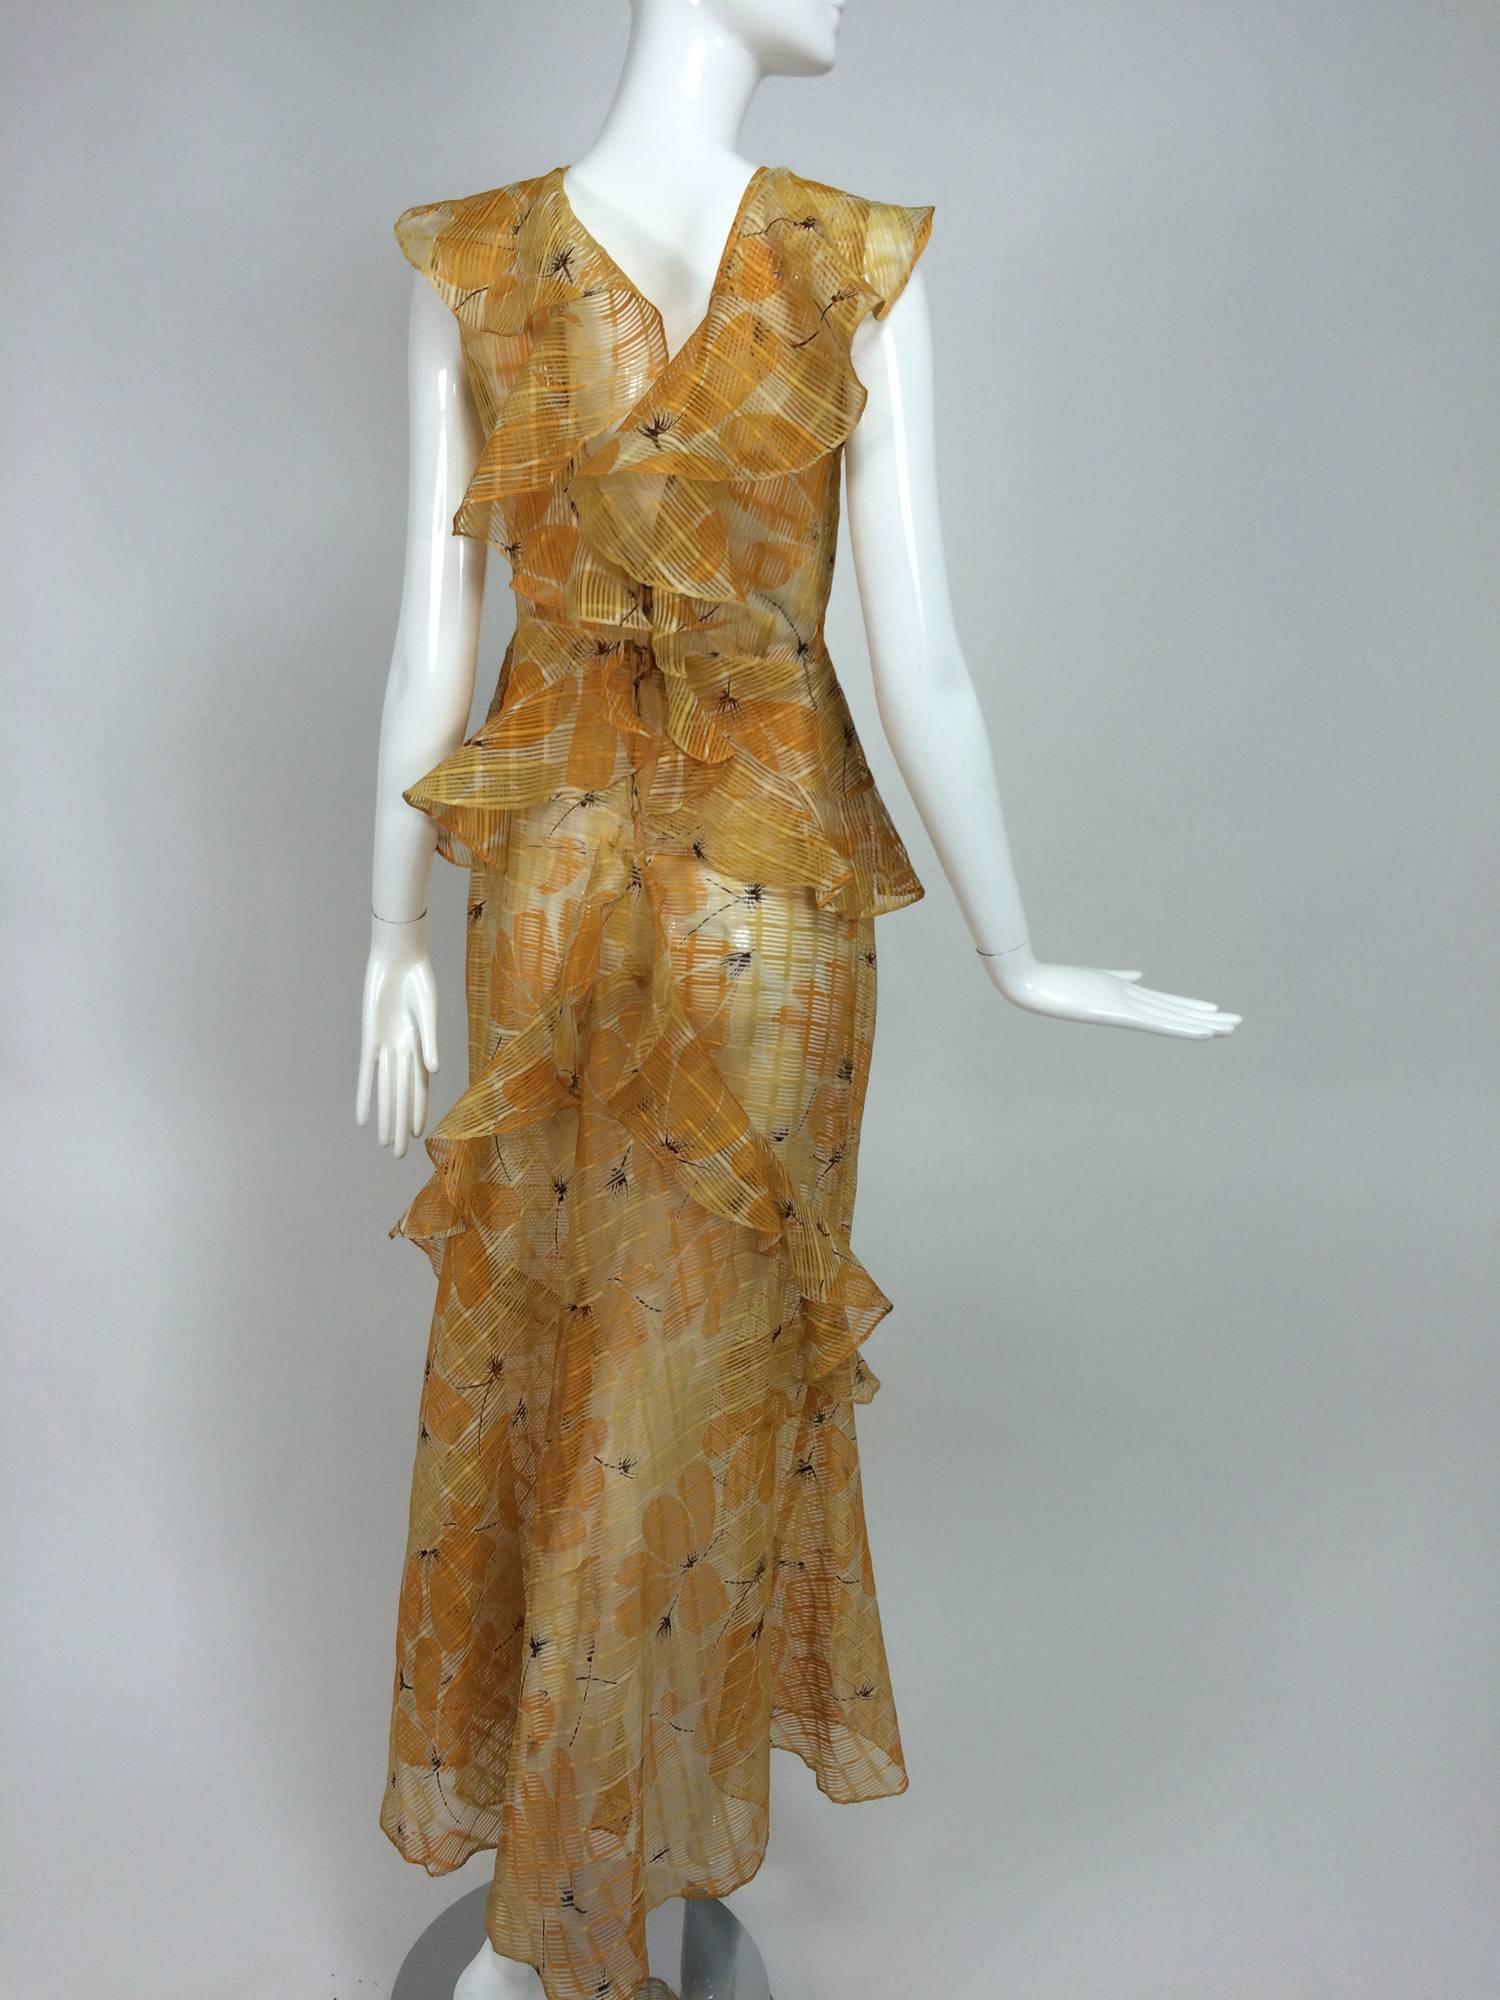 Sheer Woven Organdy ruffle daydress in floral cream & orange 1930s unworn 2